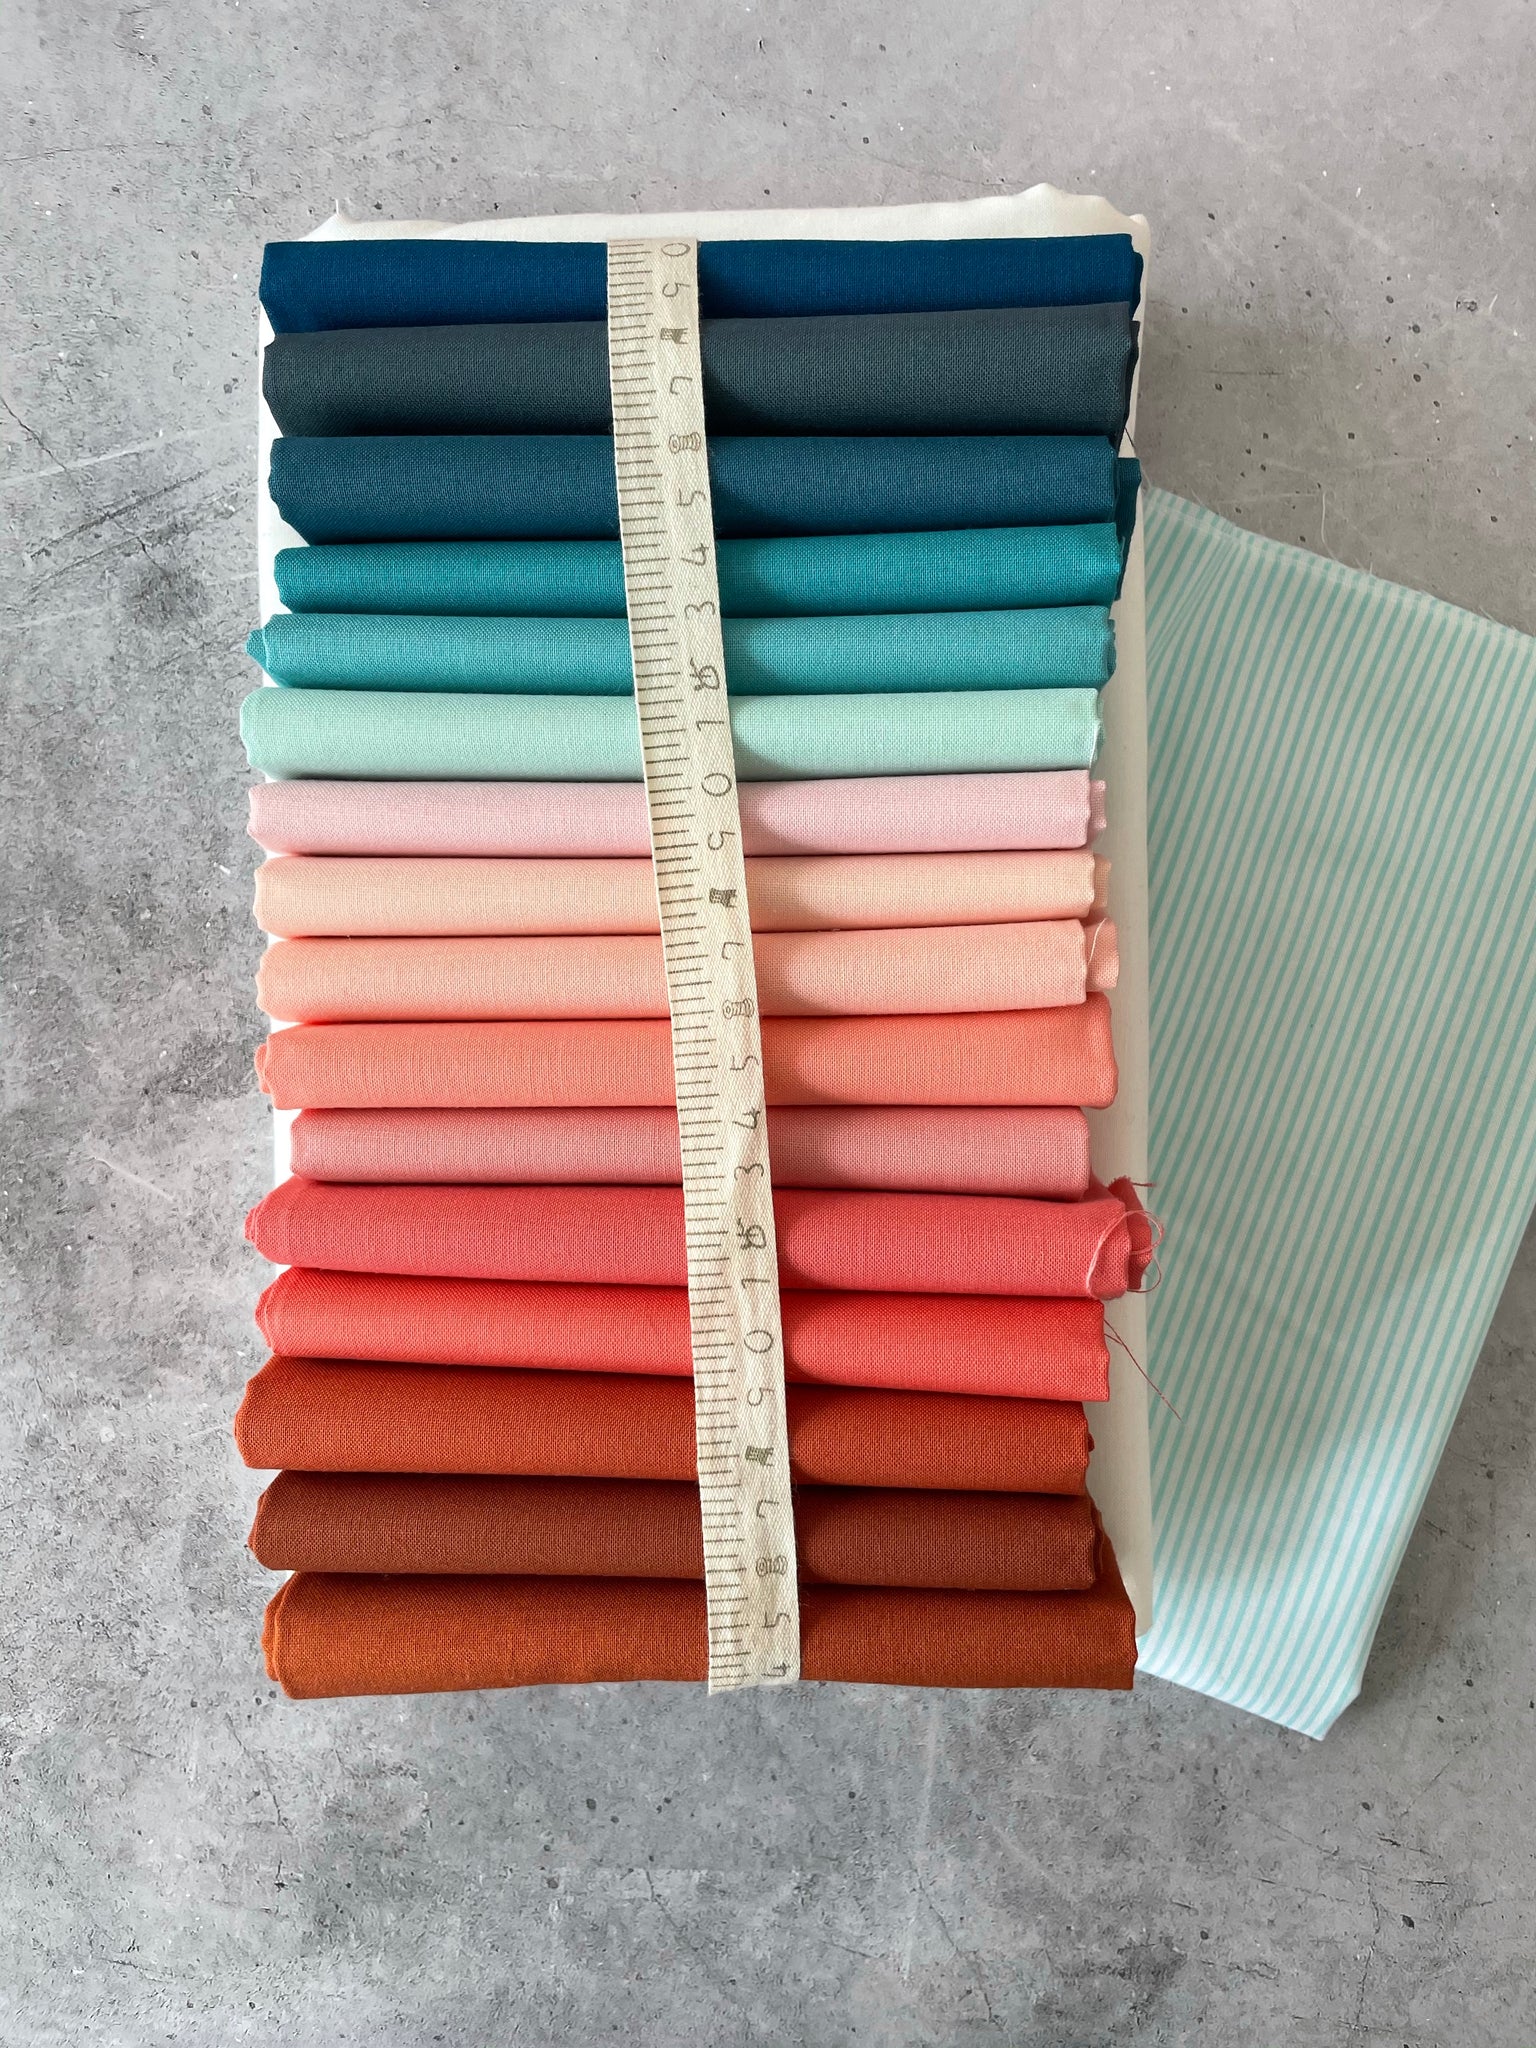 Suzy quilts 'Shine Quilt' fabric bundle kit - throw size  (Bella, and Robert Kaufman Kitchen window wovens)